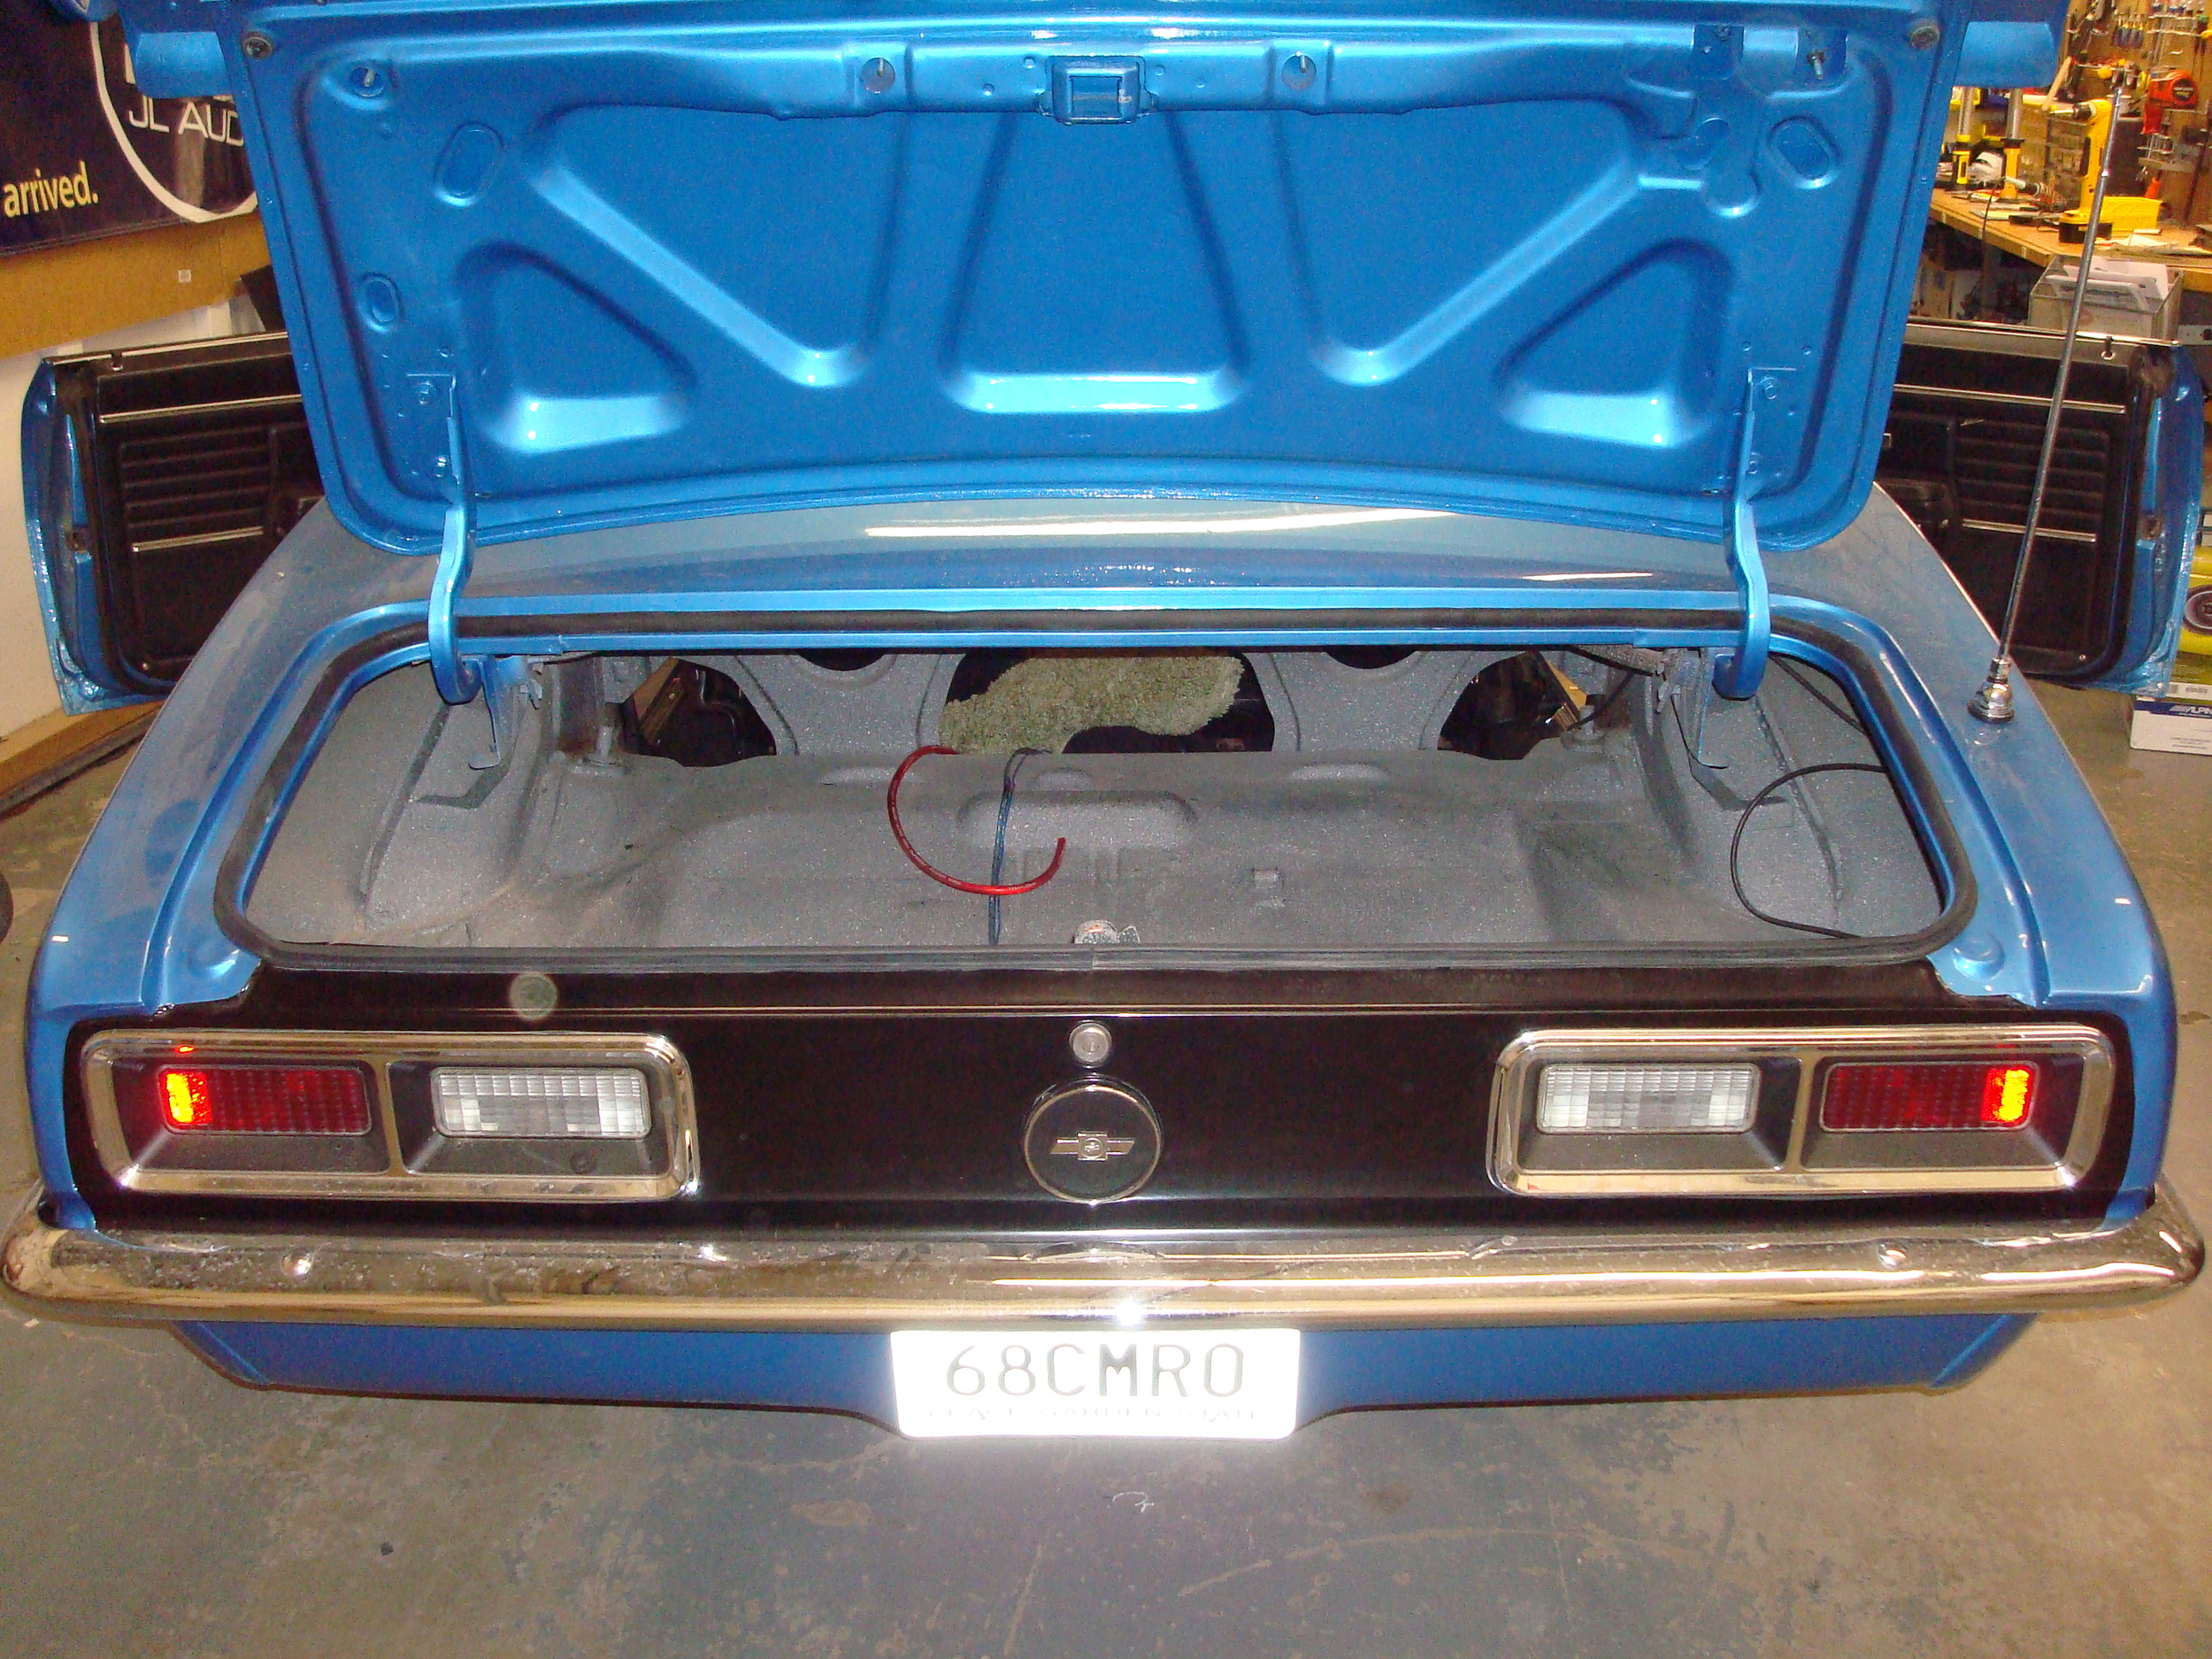 1968 Camaro - Trunk BEFORE